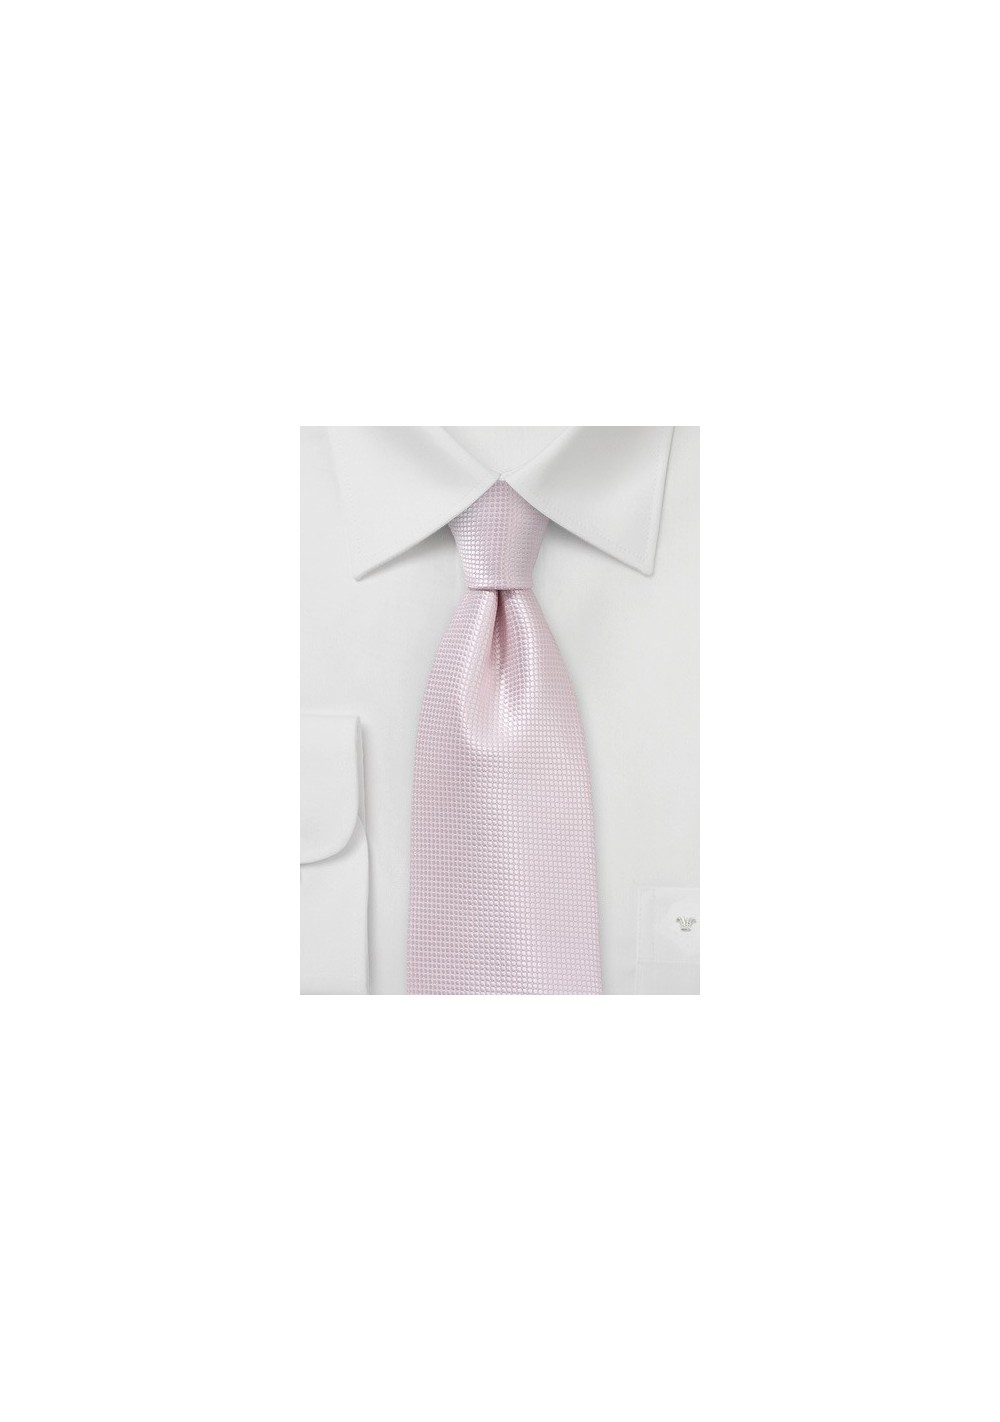 Extra Long Wedding Tie in Blush Pink